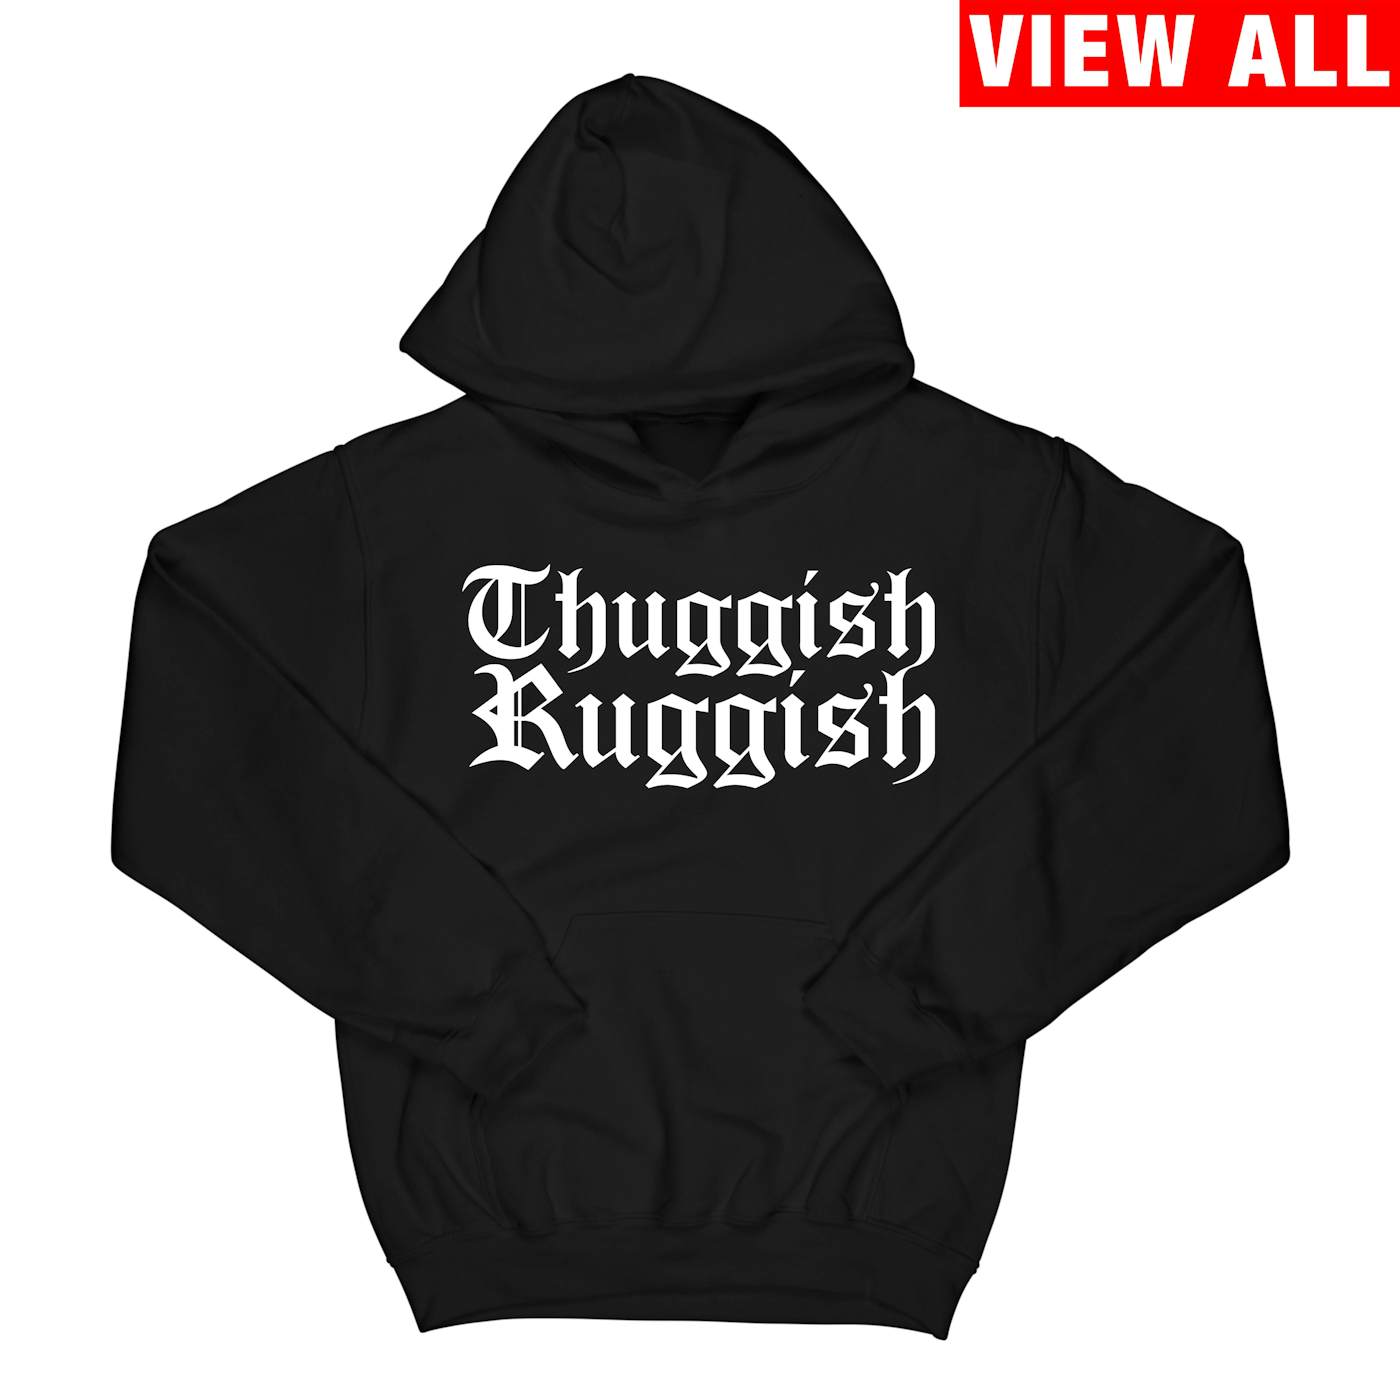 Bone Thugs-N-Harmony Thuggish Ruggish "White Logo" Hoodie